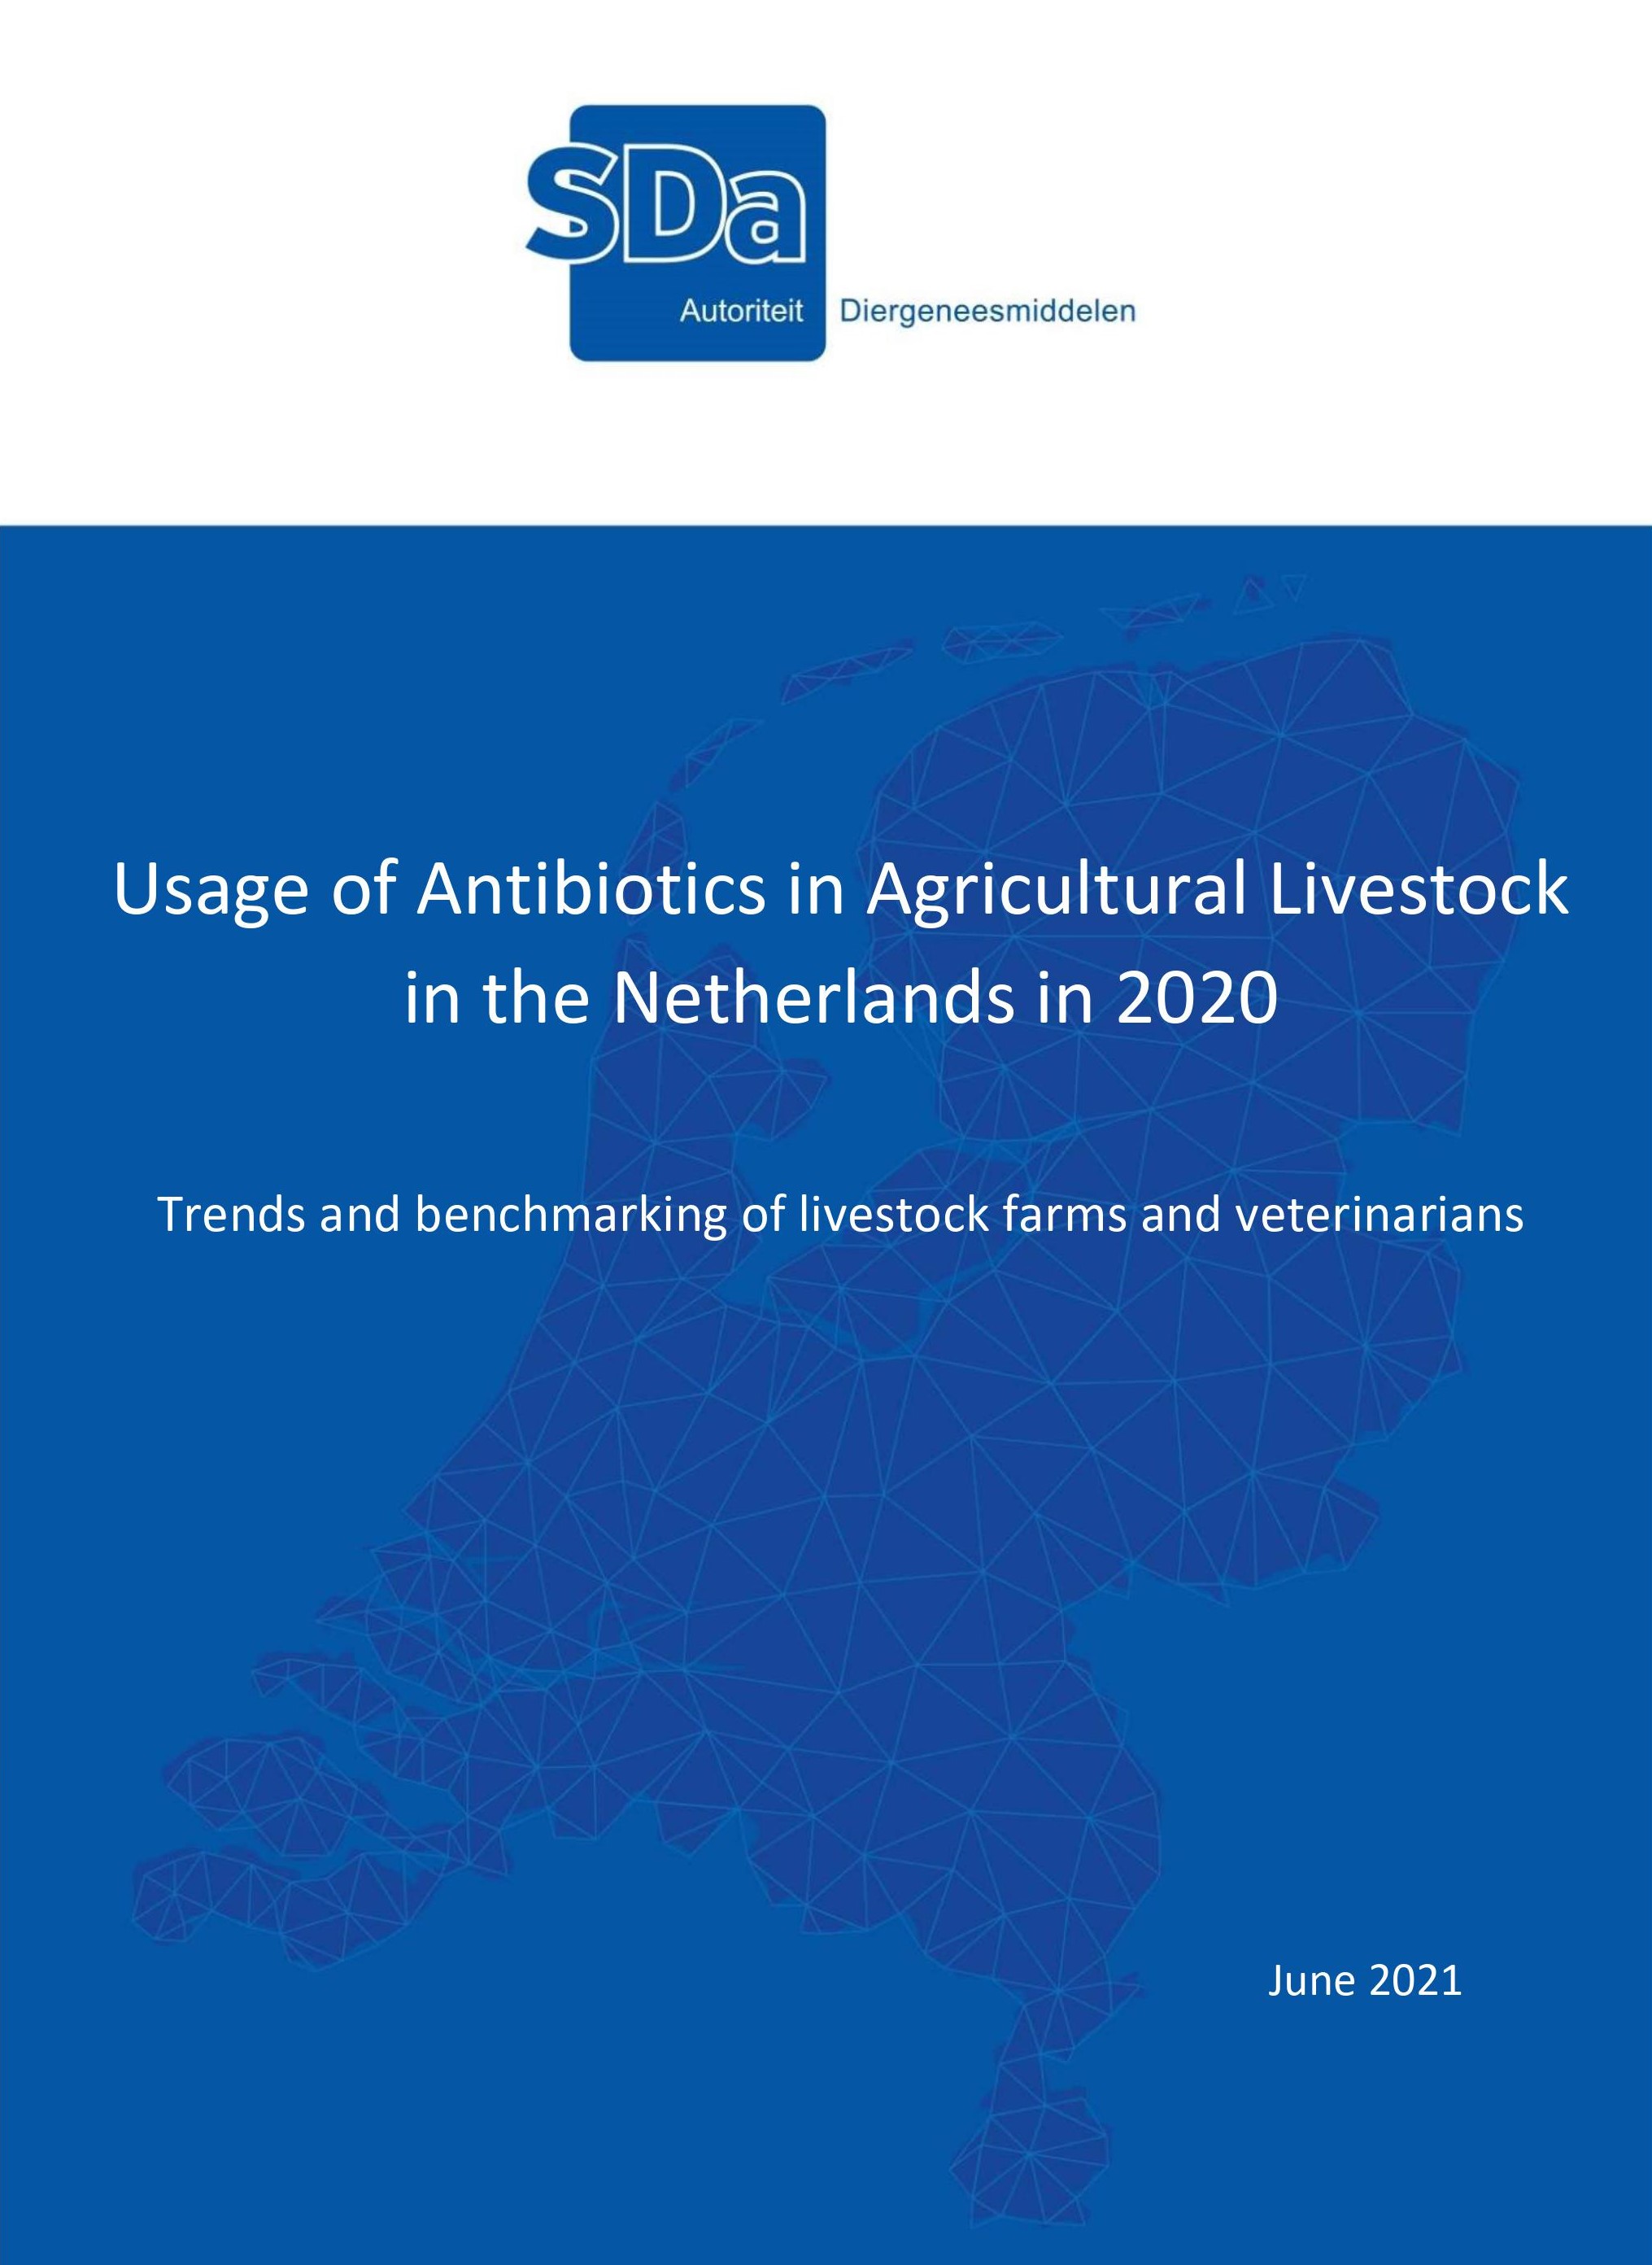 SDa-report 'Usage of antibiotics livestock in the Netherlands in 2020'